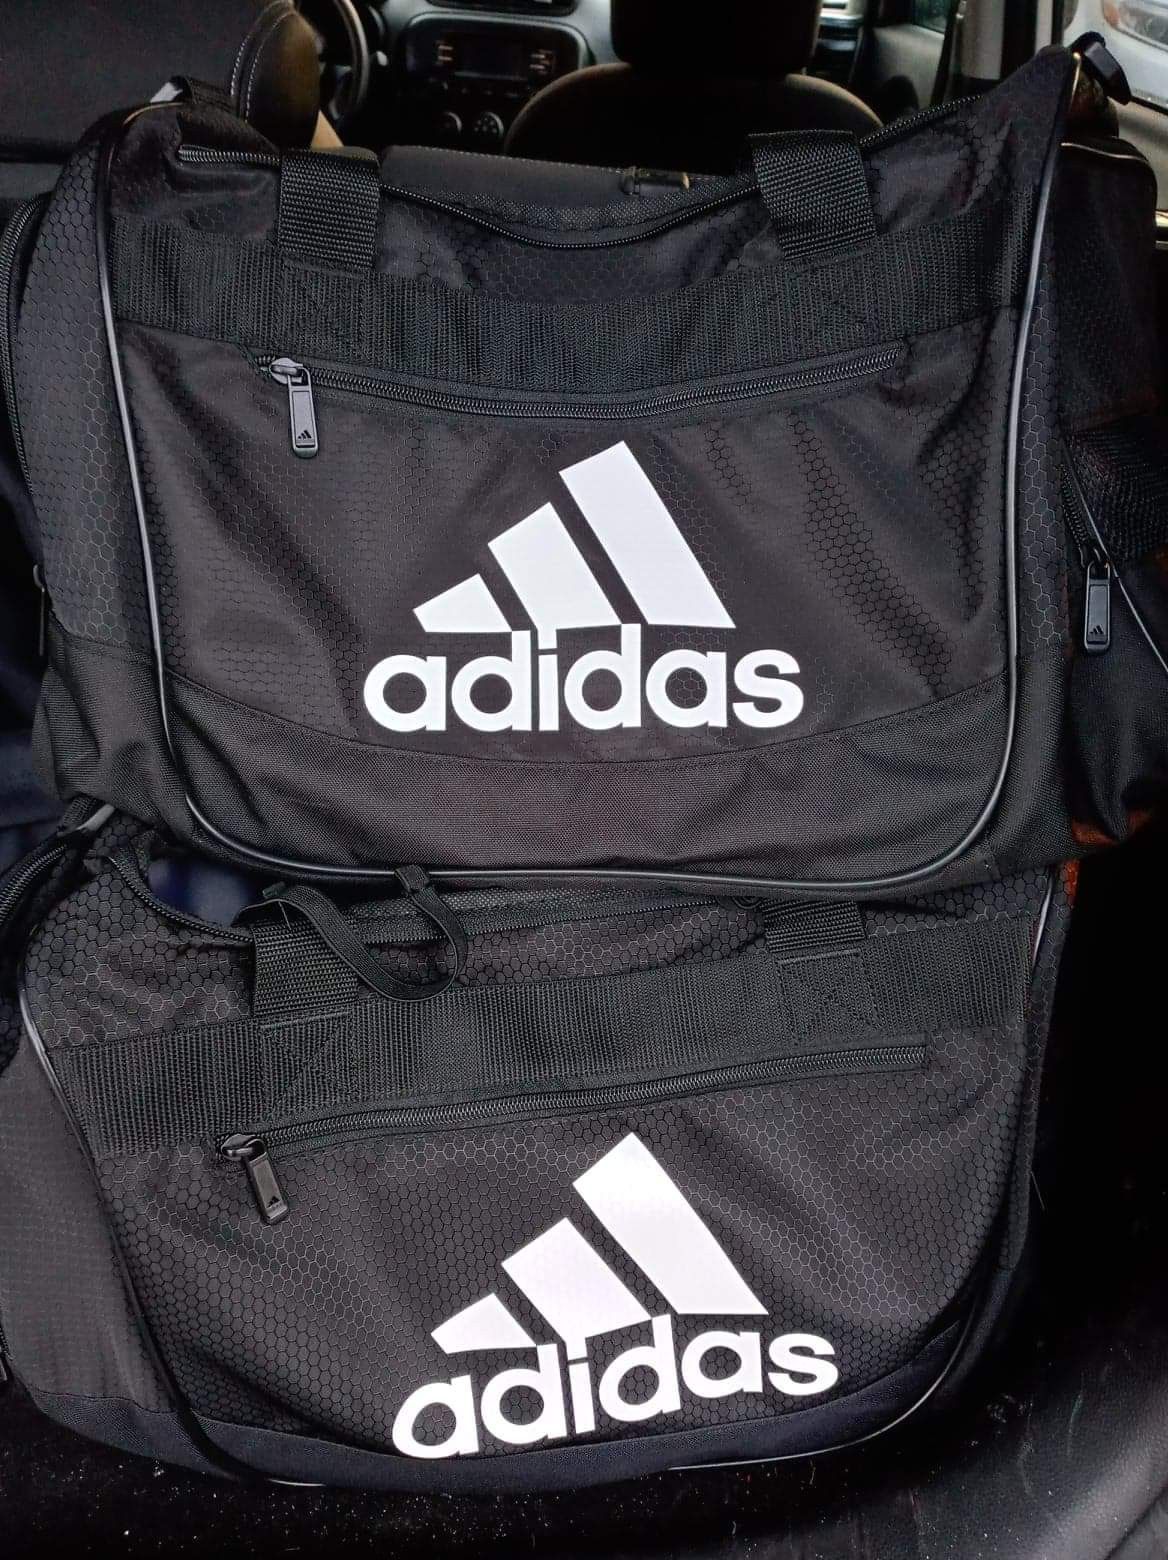 2 Adidas Gym Bags